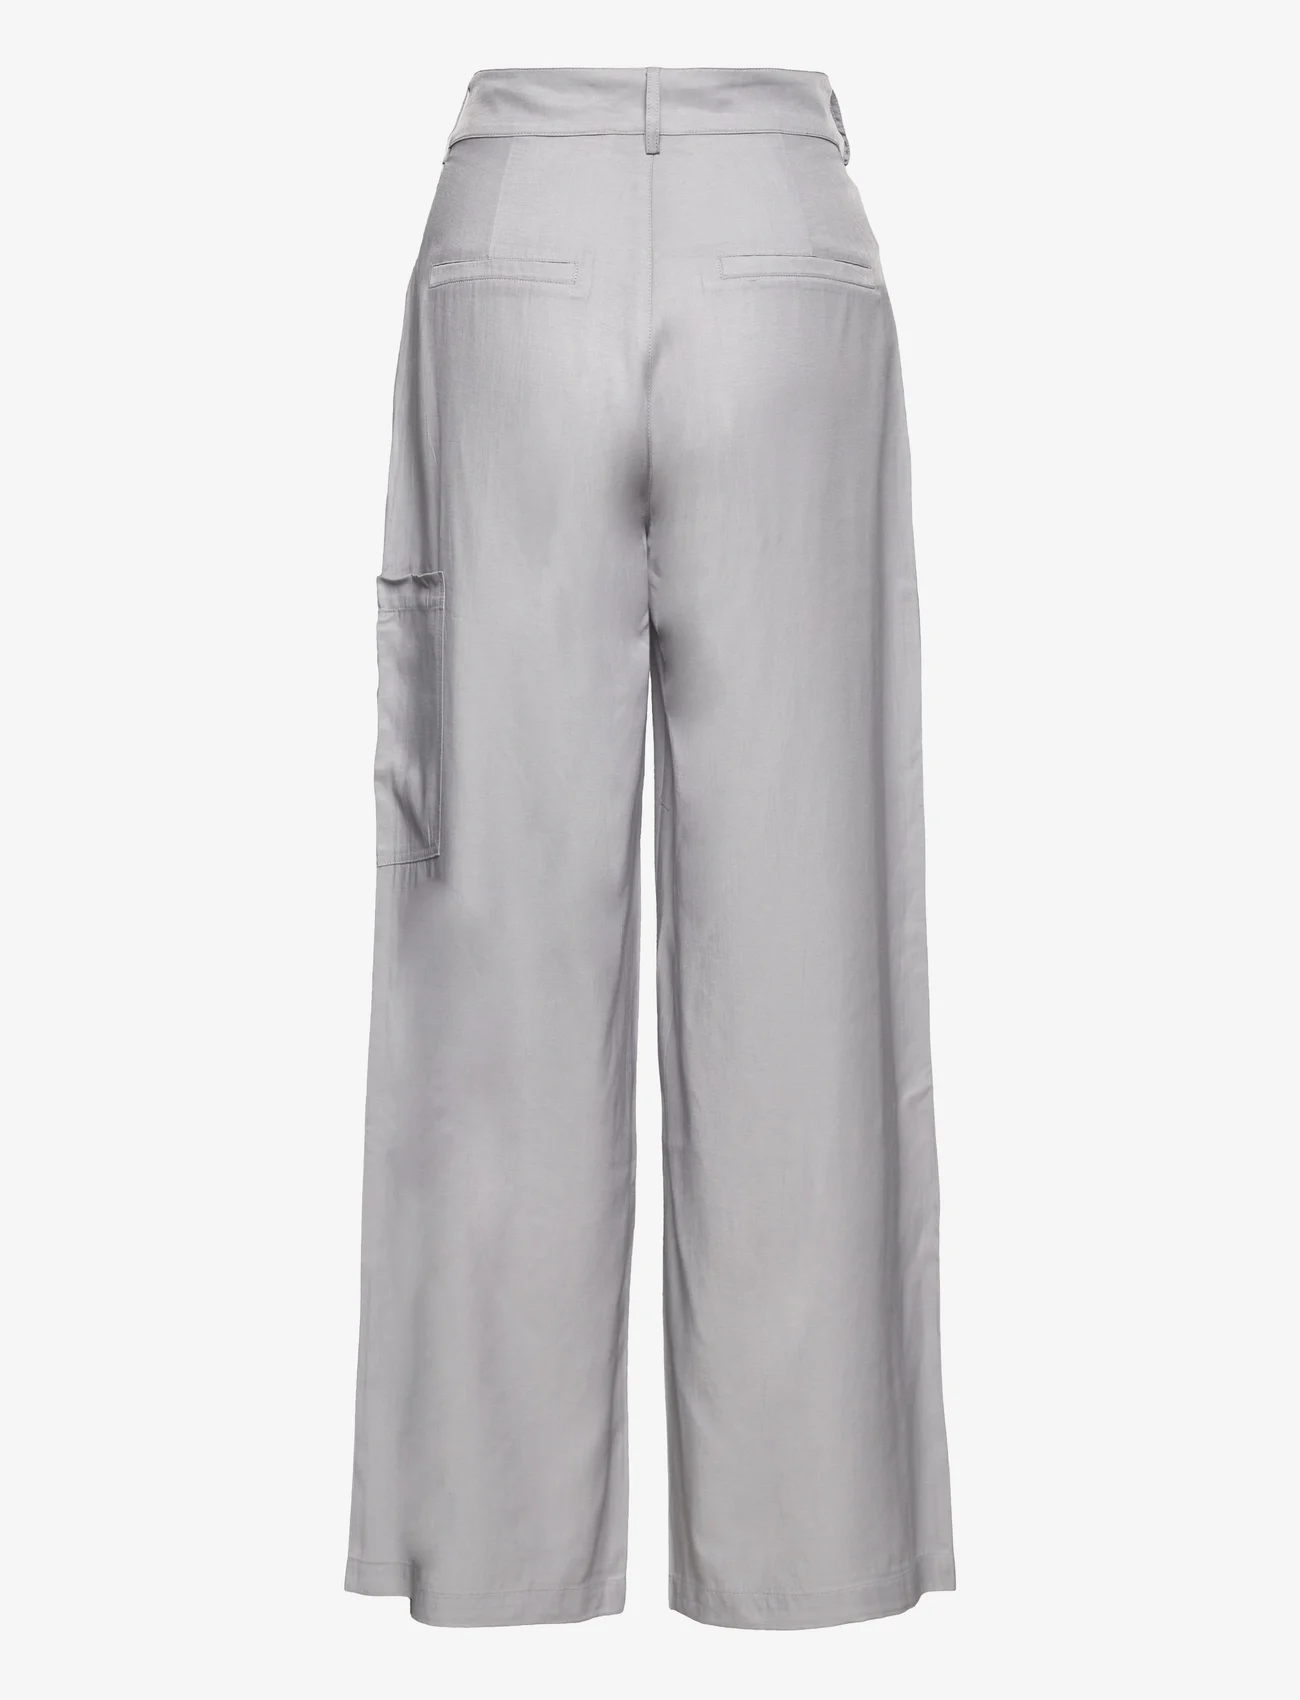 A-View - Leona pants - cargo pants - light grey - 1